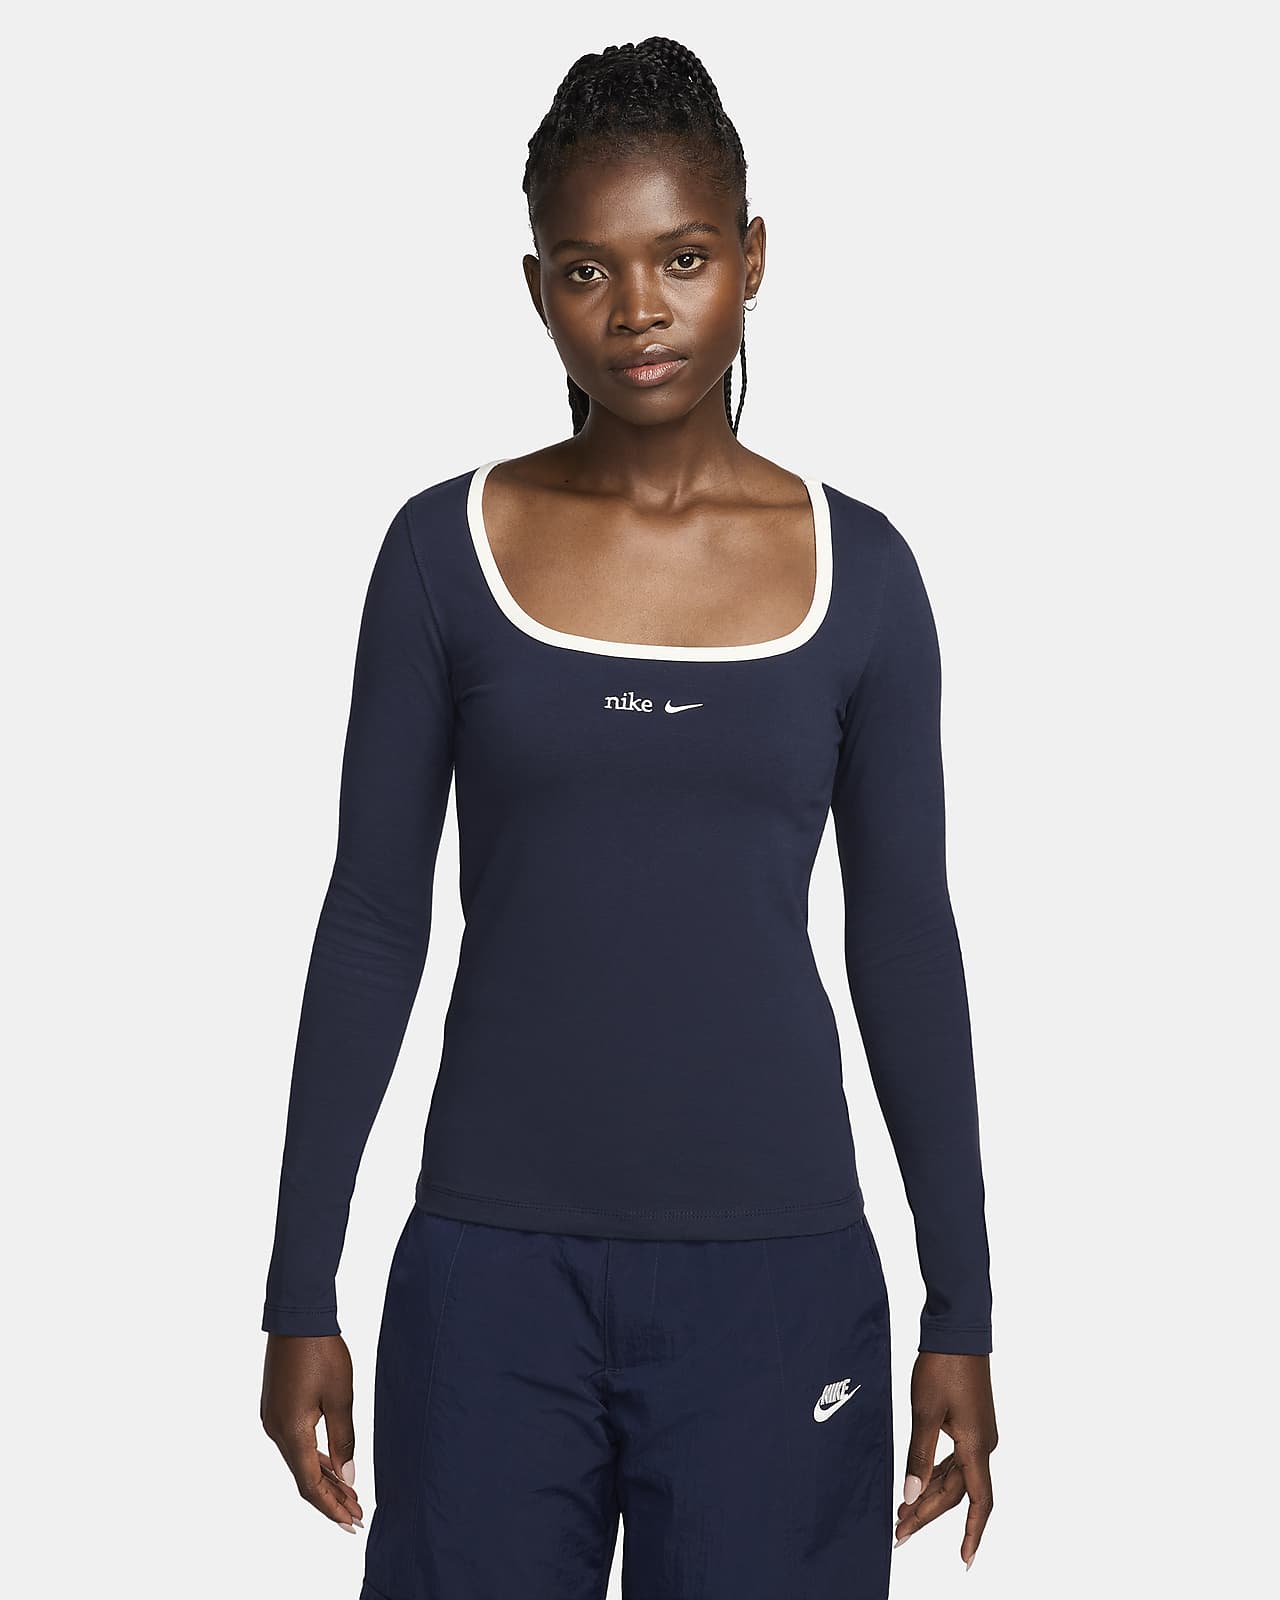 Women's Sportswear Clothing. Nike ZA